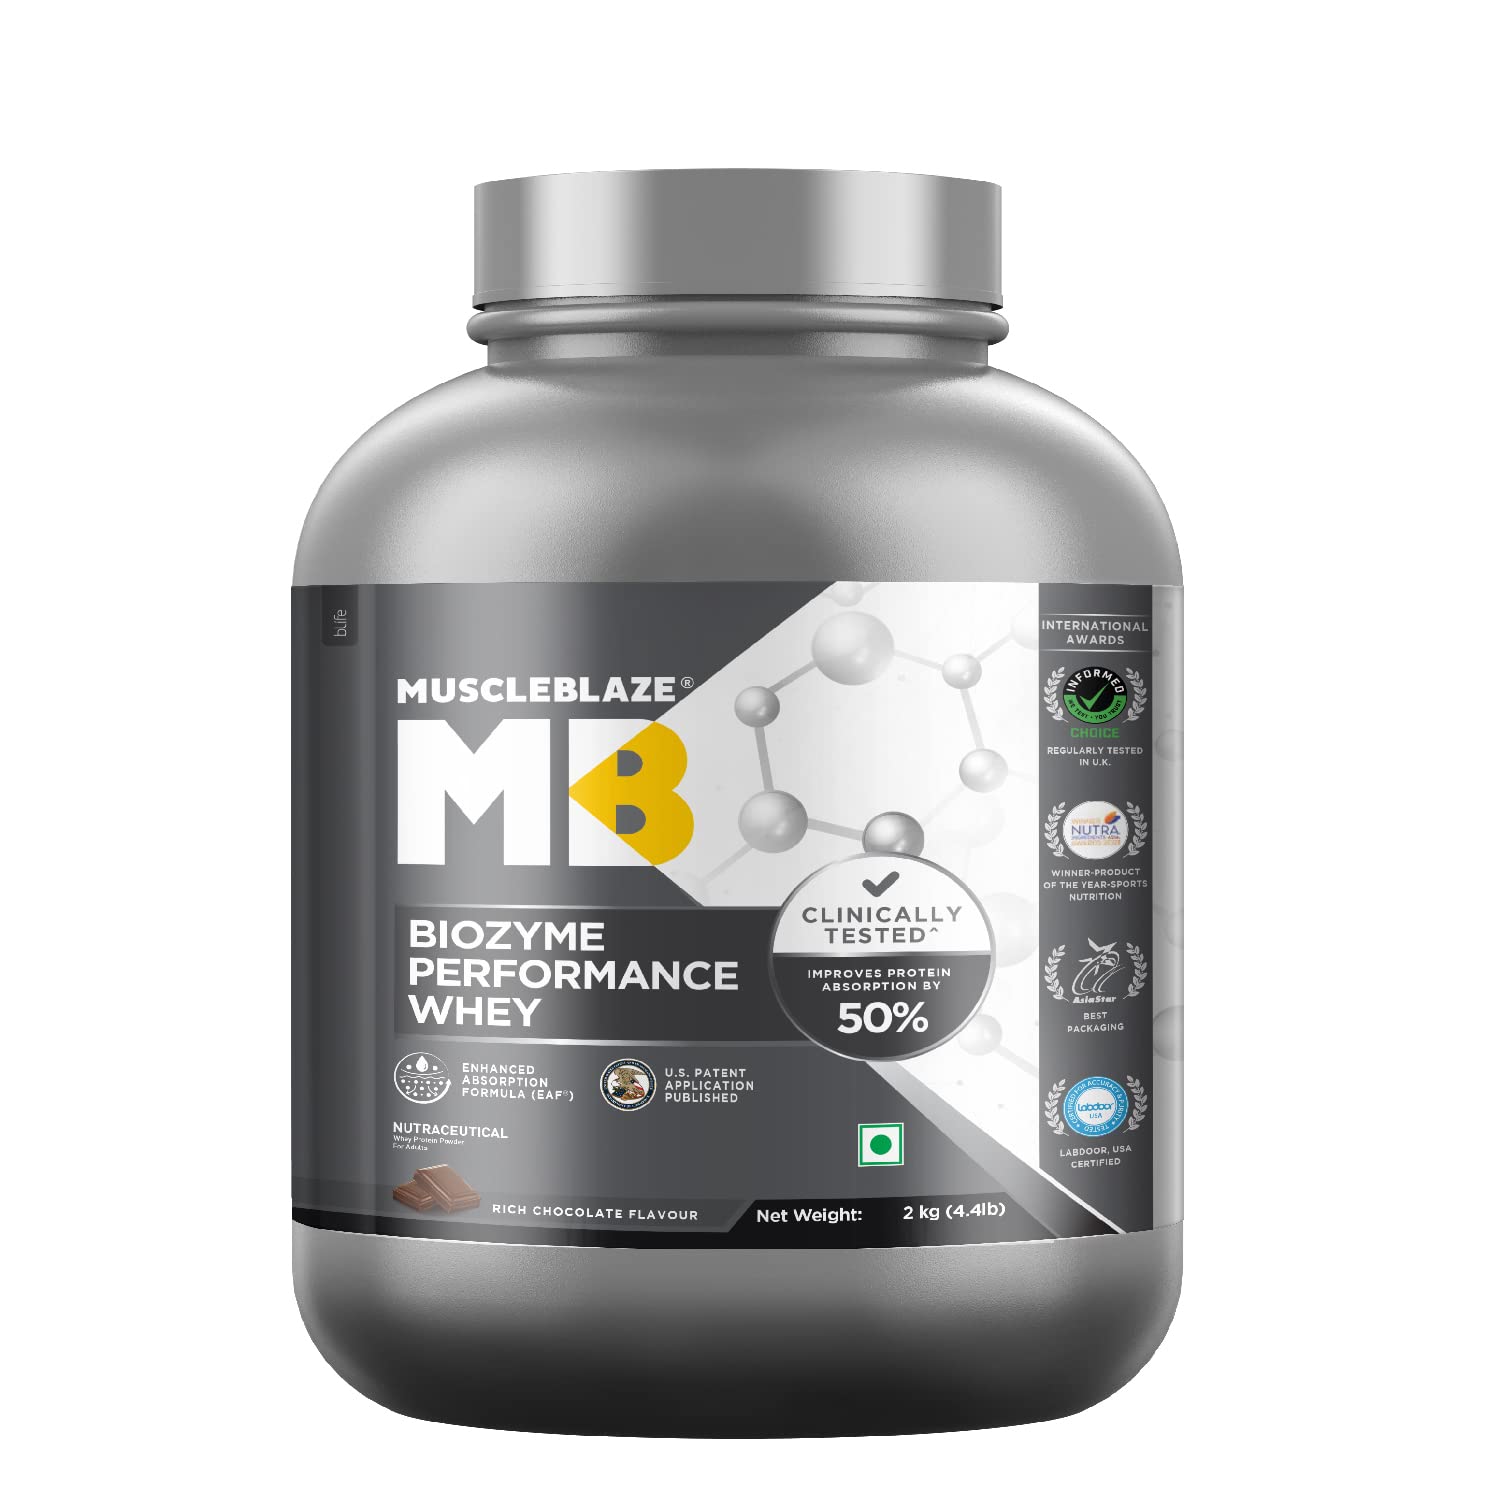 MuscleBlaze Biozyme Performance Whey - 4.4 Lbs (2Kg) 